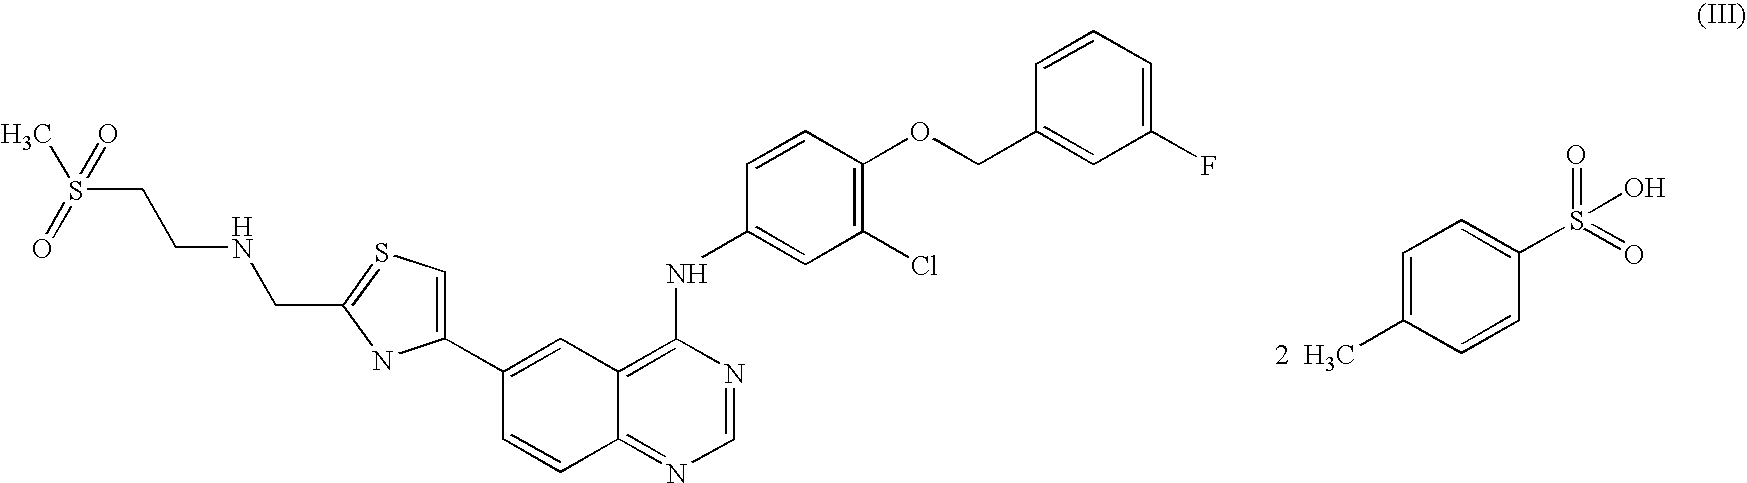 Quinazoline ditosylate salt compounds